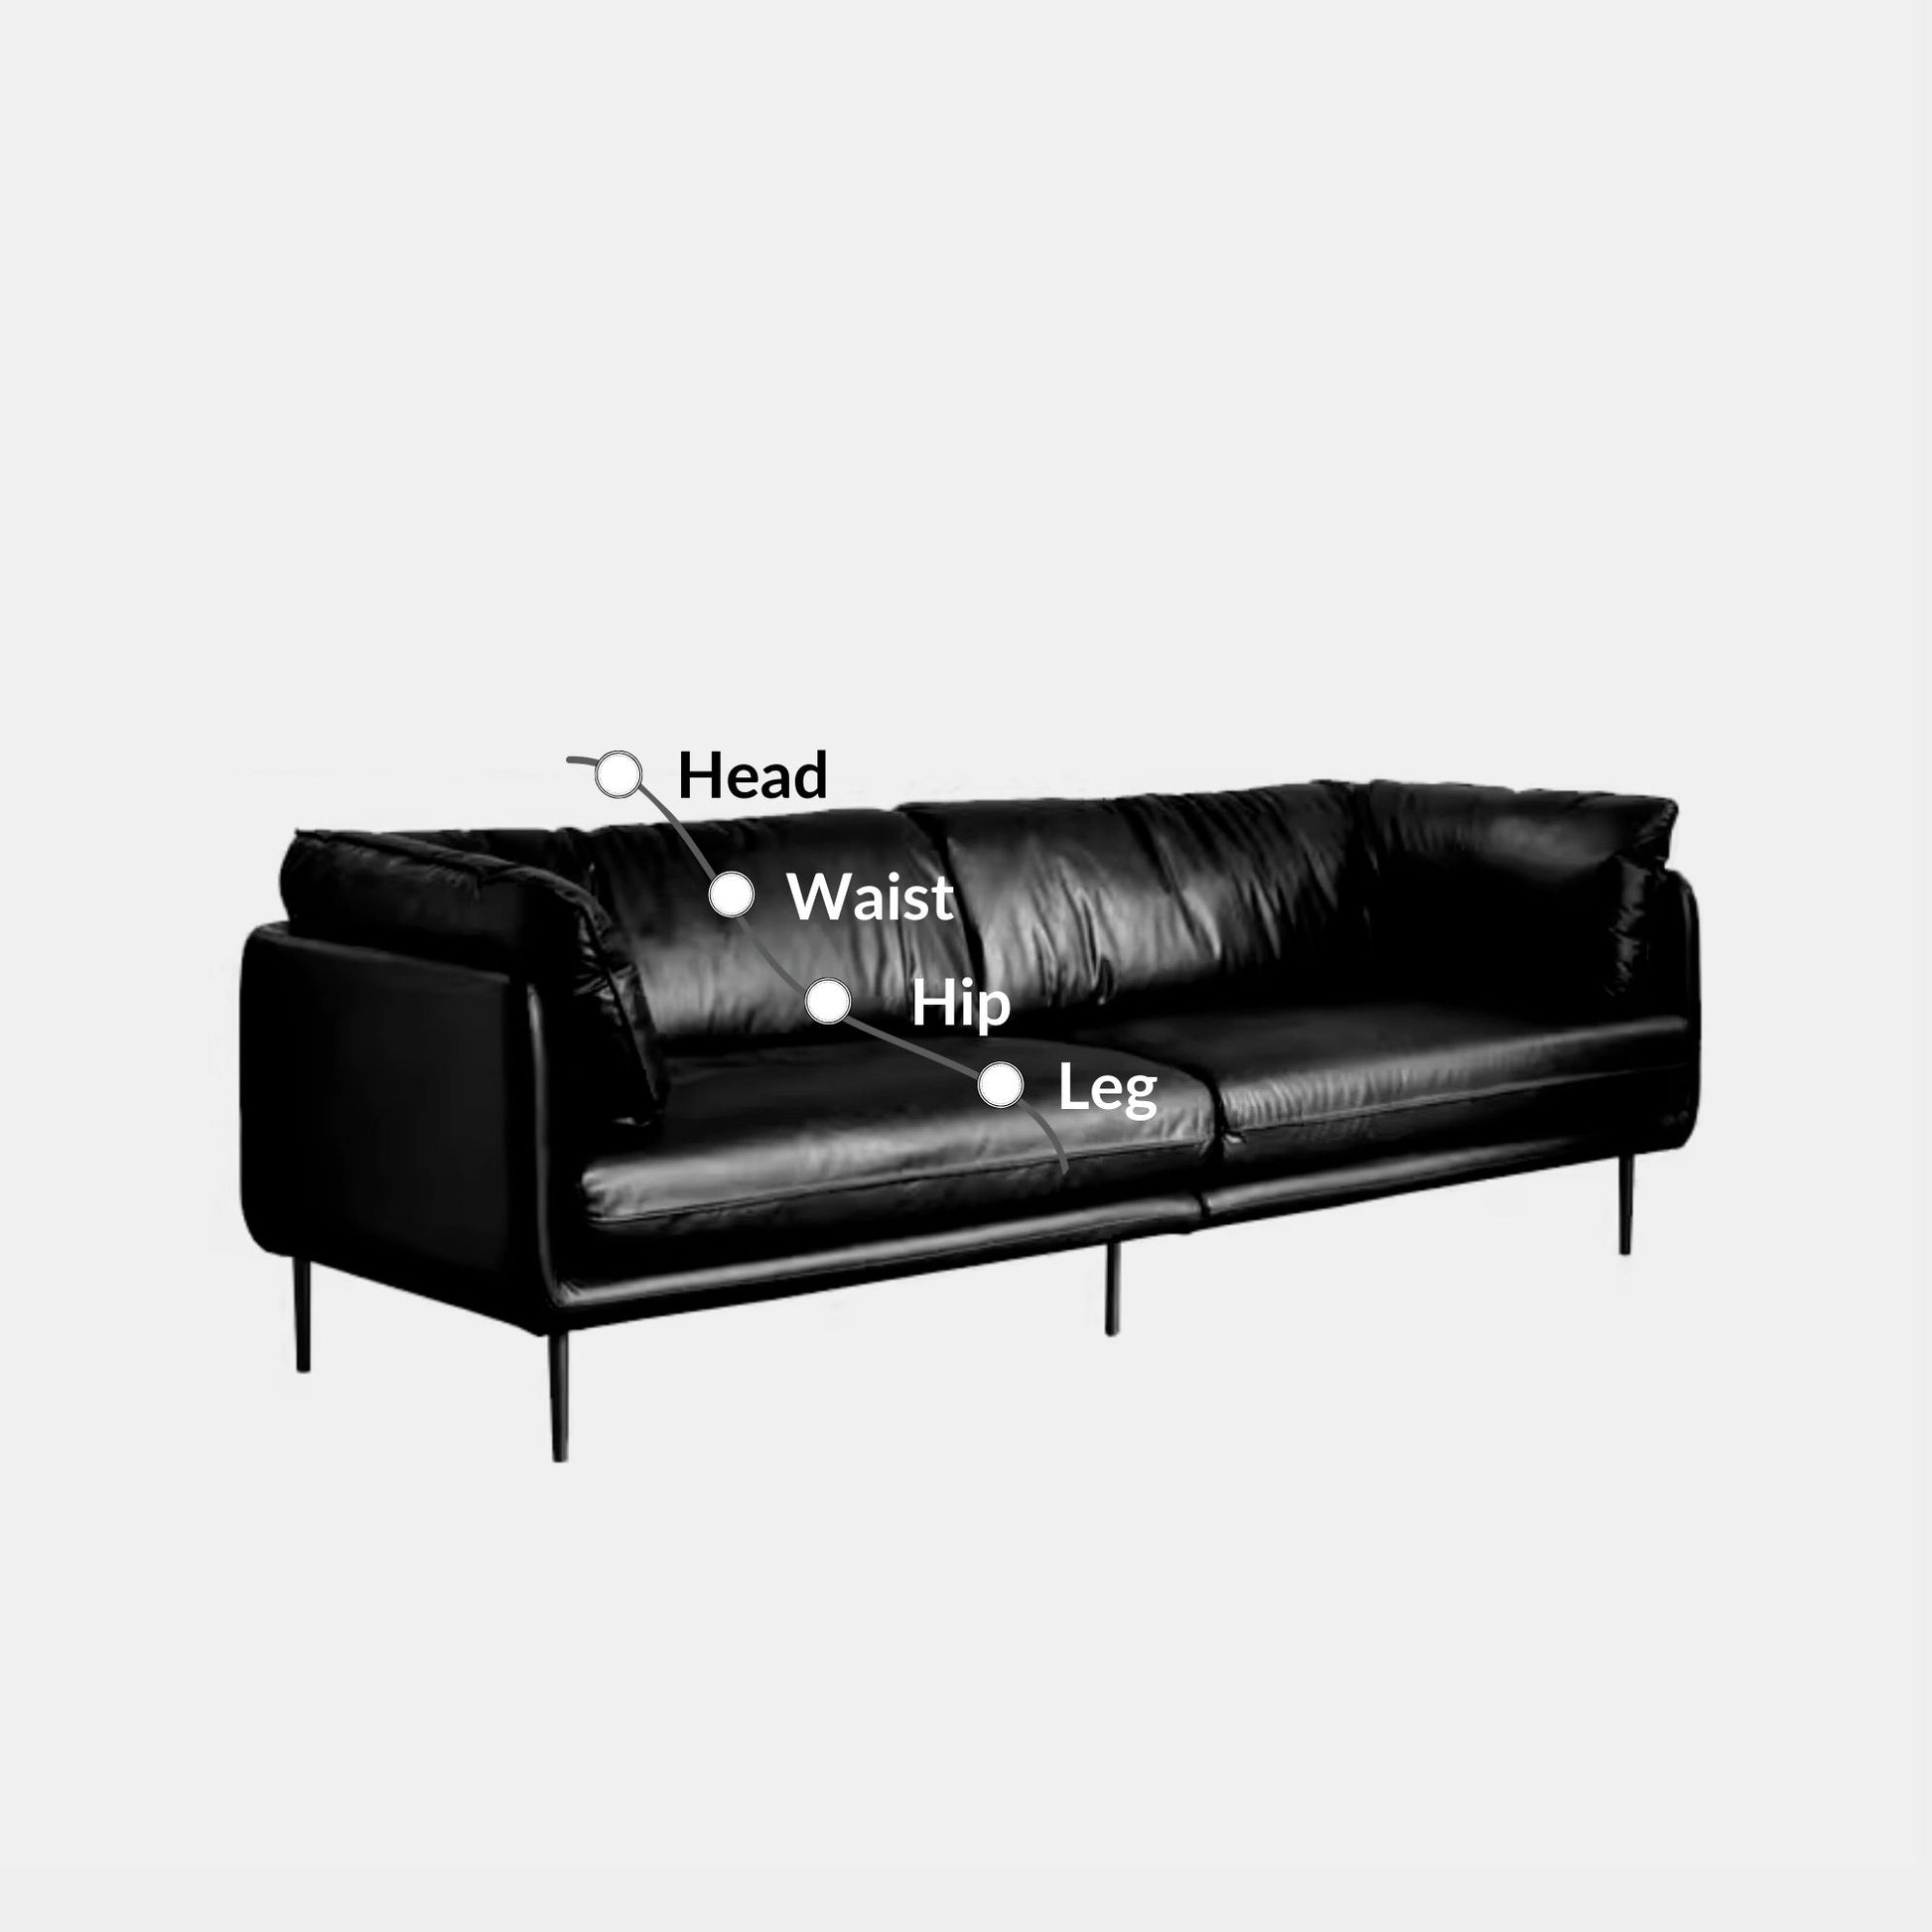 Cuddle full leather sofa black